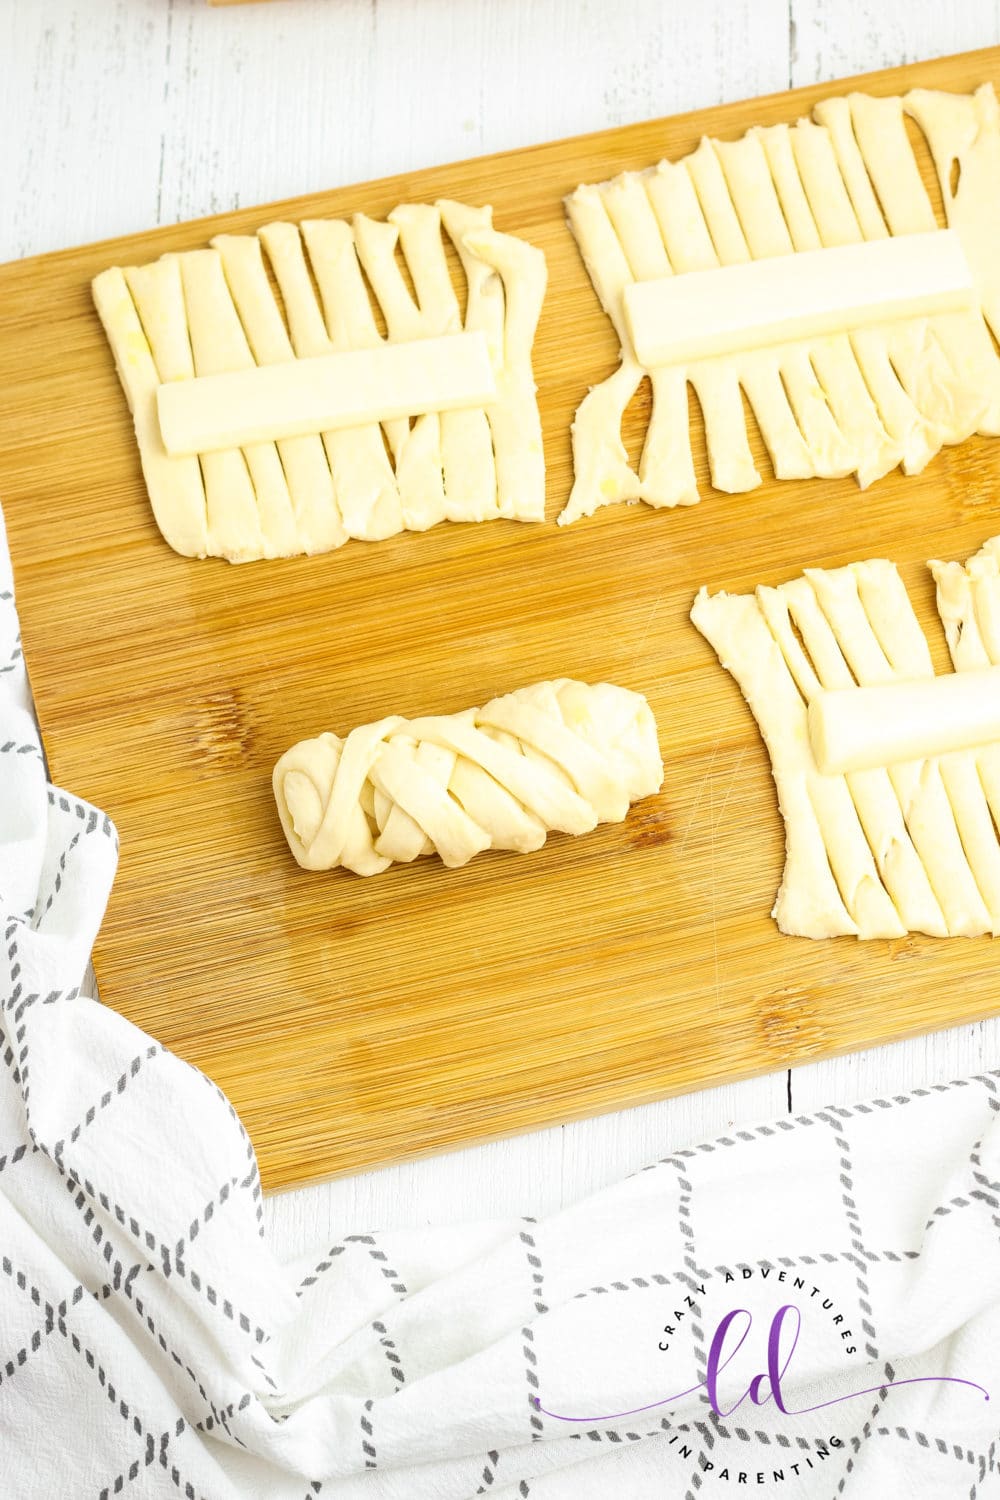 Wrap Dough Around Cheese for Cheesy Mummy Breadsticks